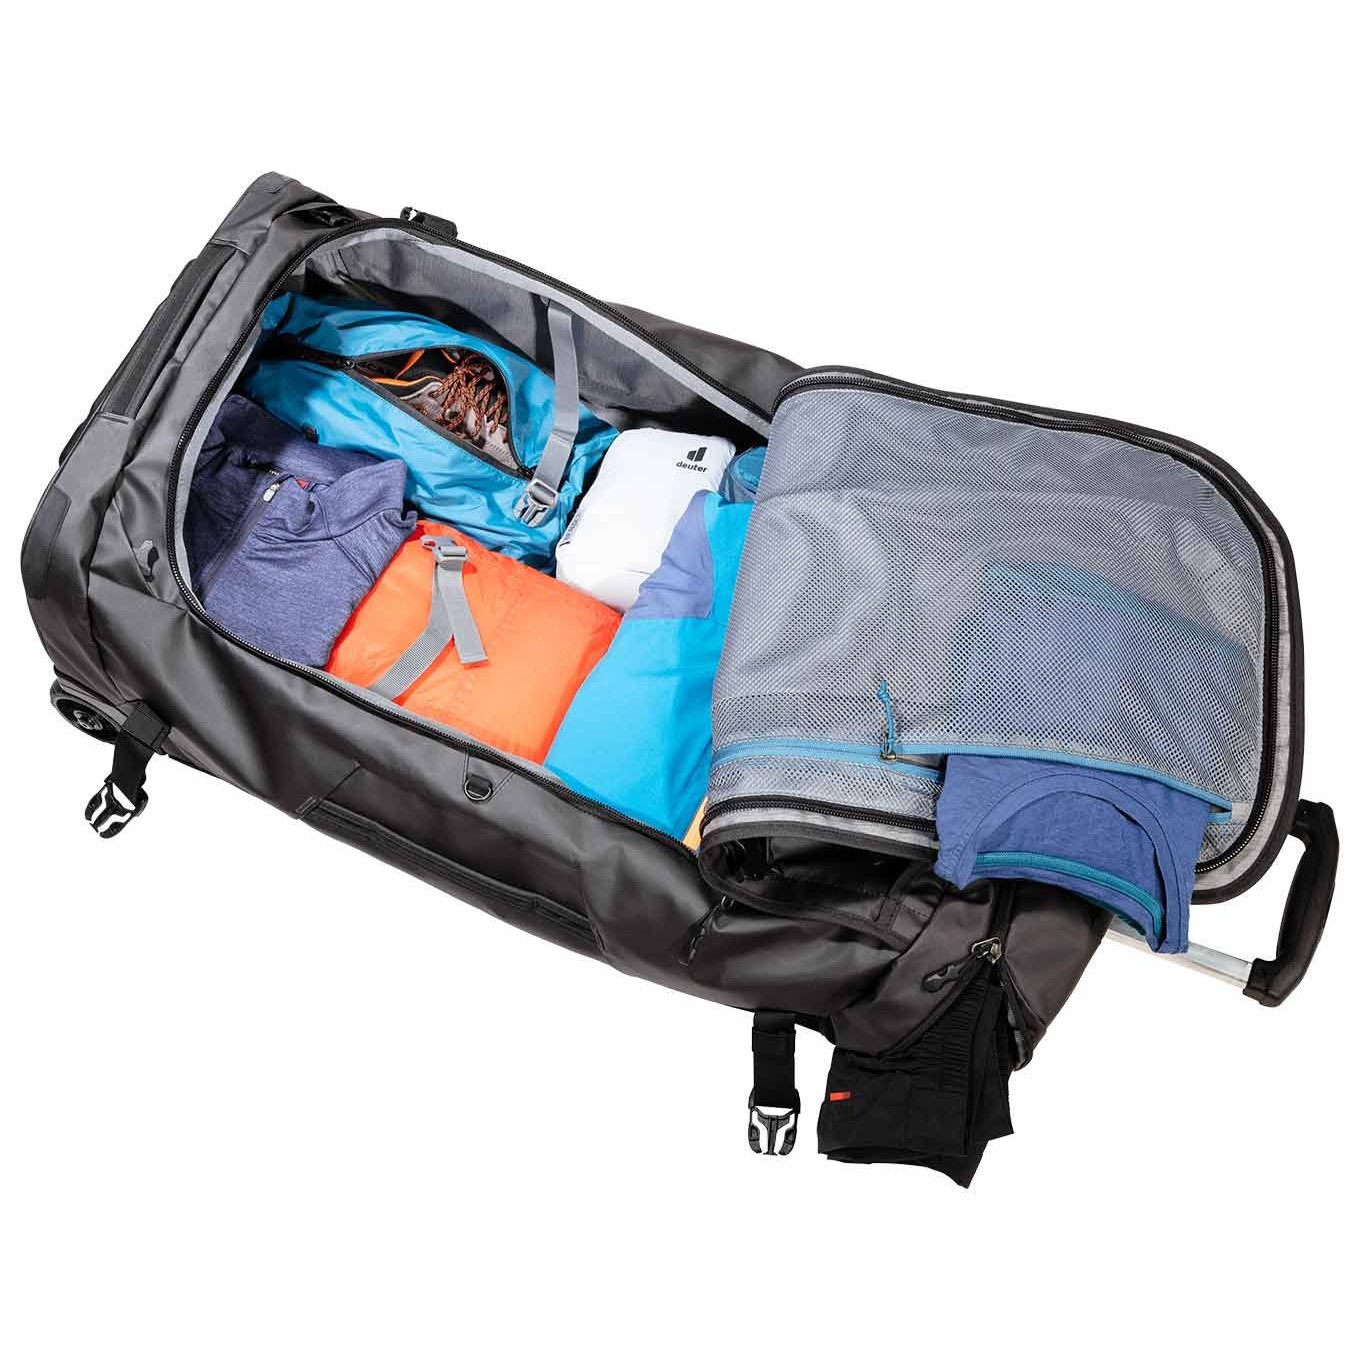 Deuter AViANT Pro Movo 90 2 Wheel Duffel Bag